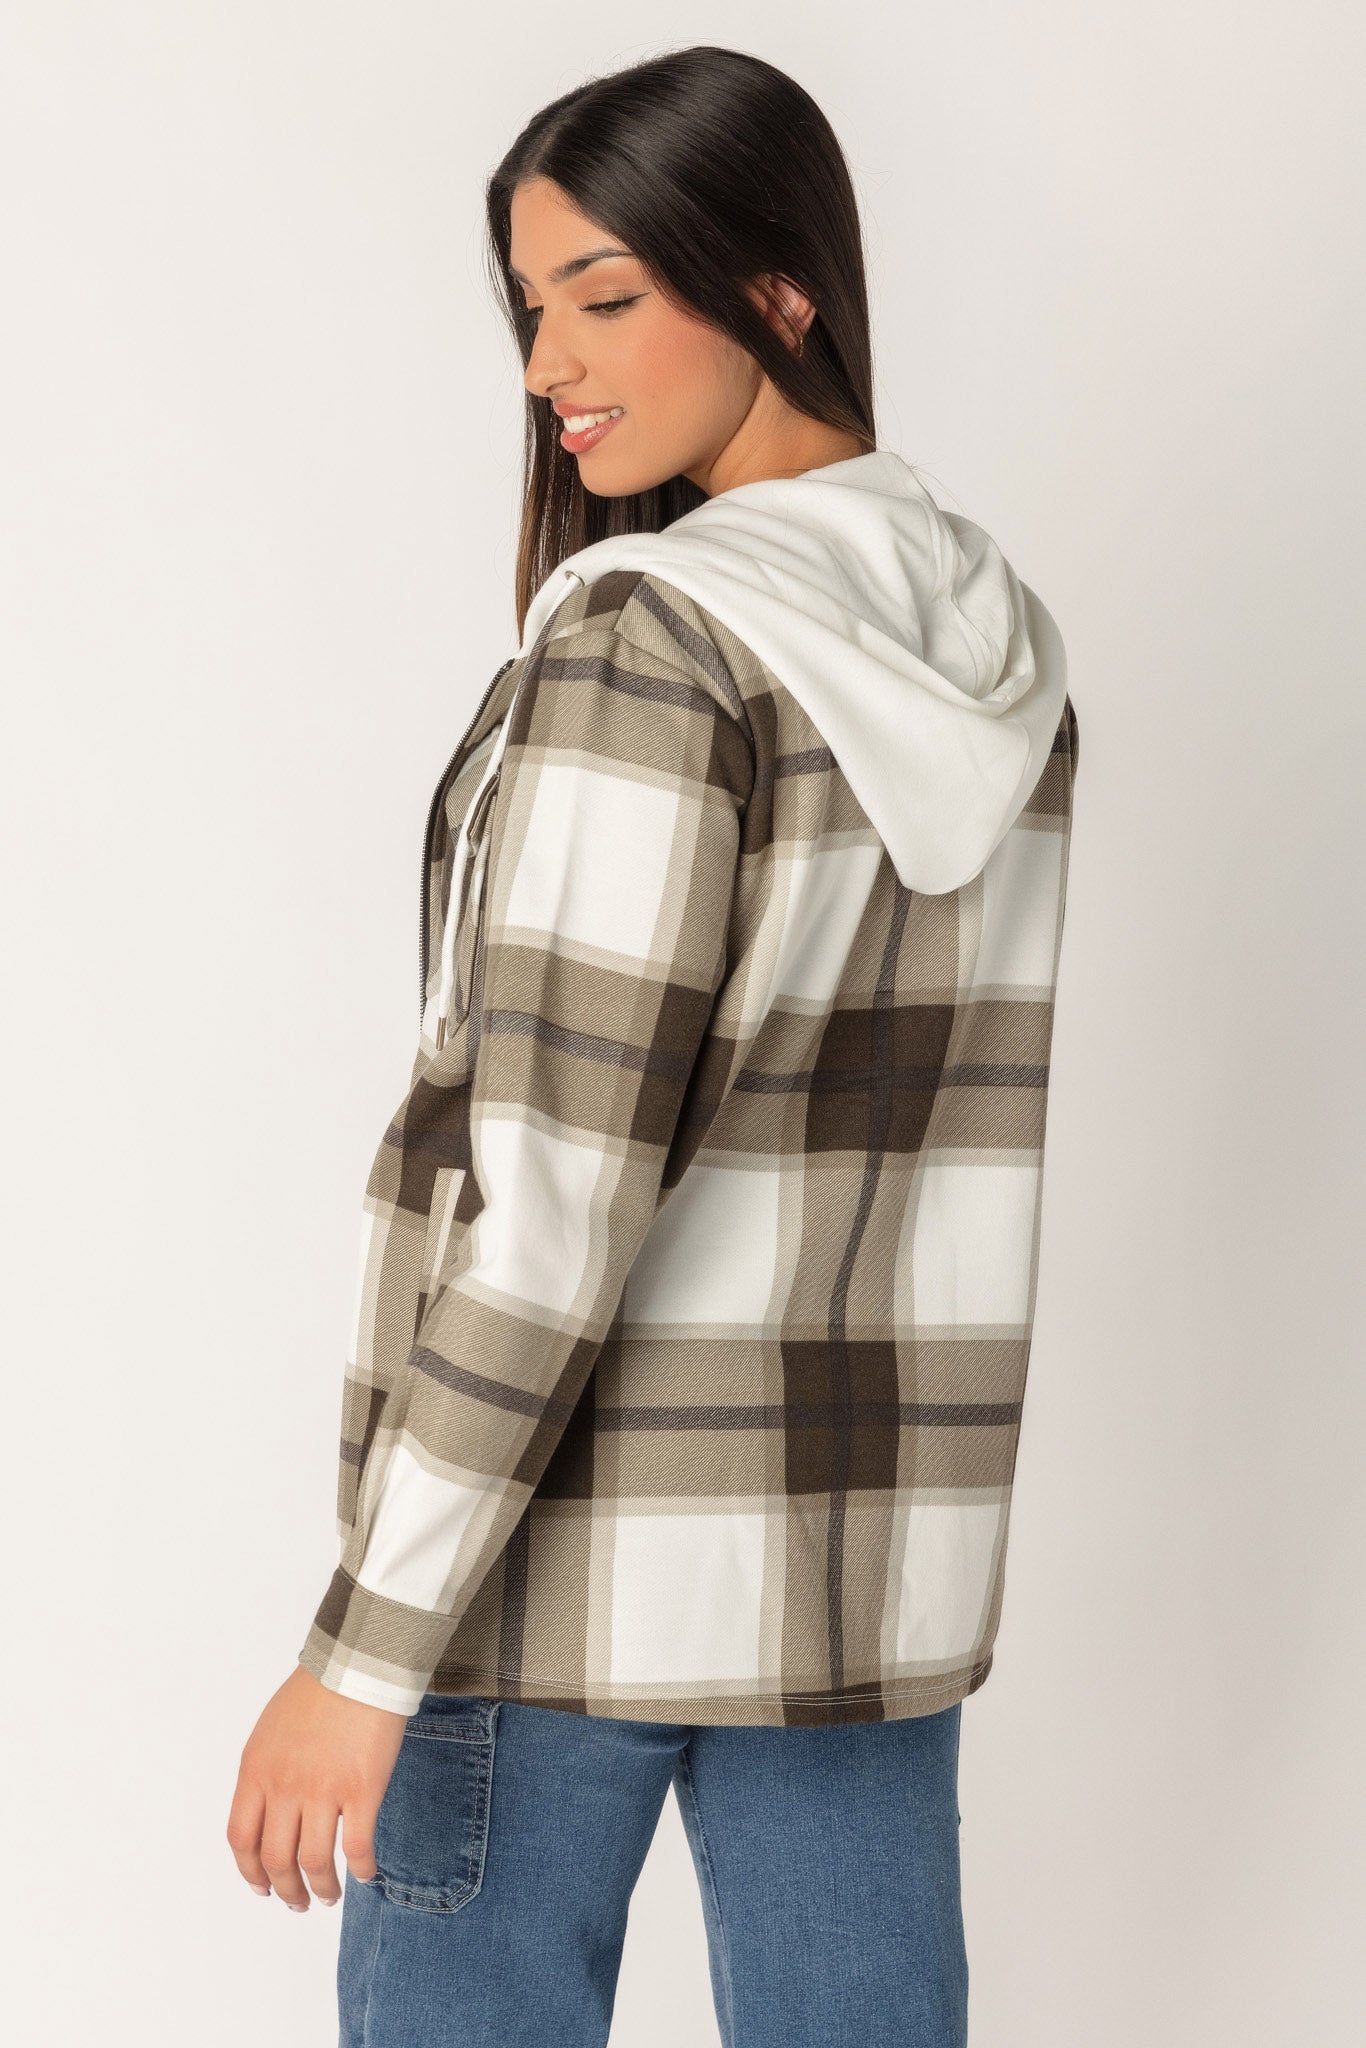 Plaid Fleece Zip-Up Shirt with Hood